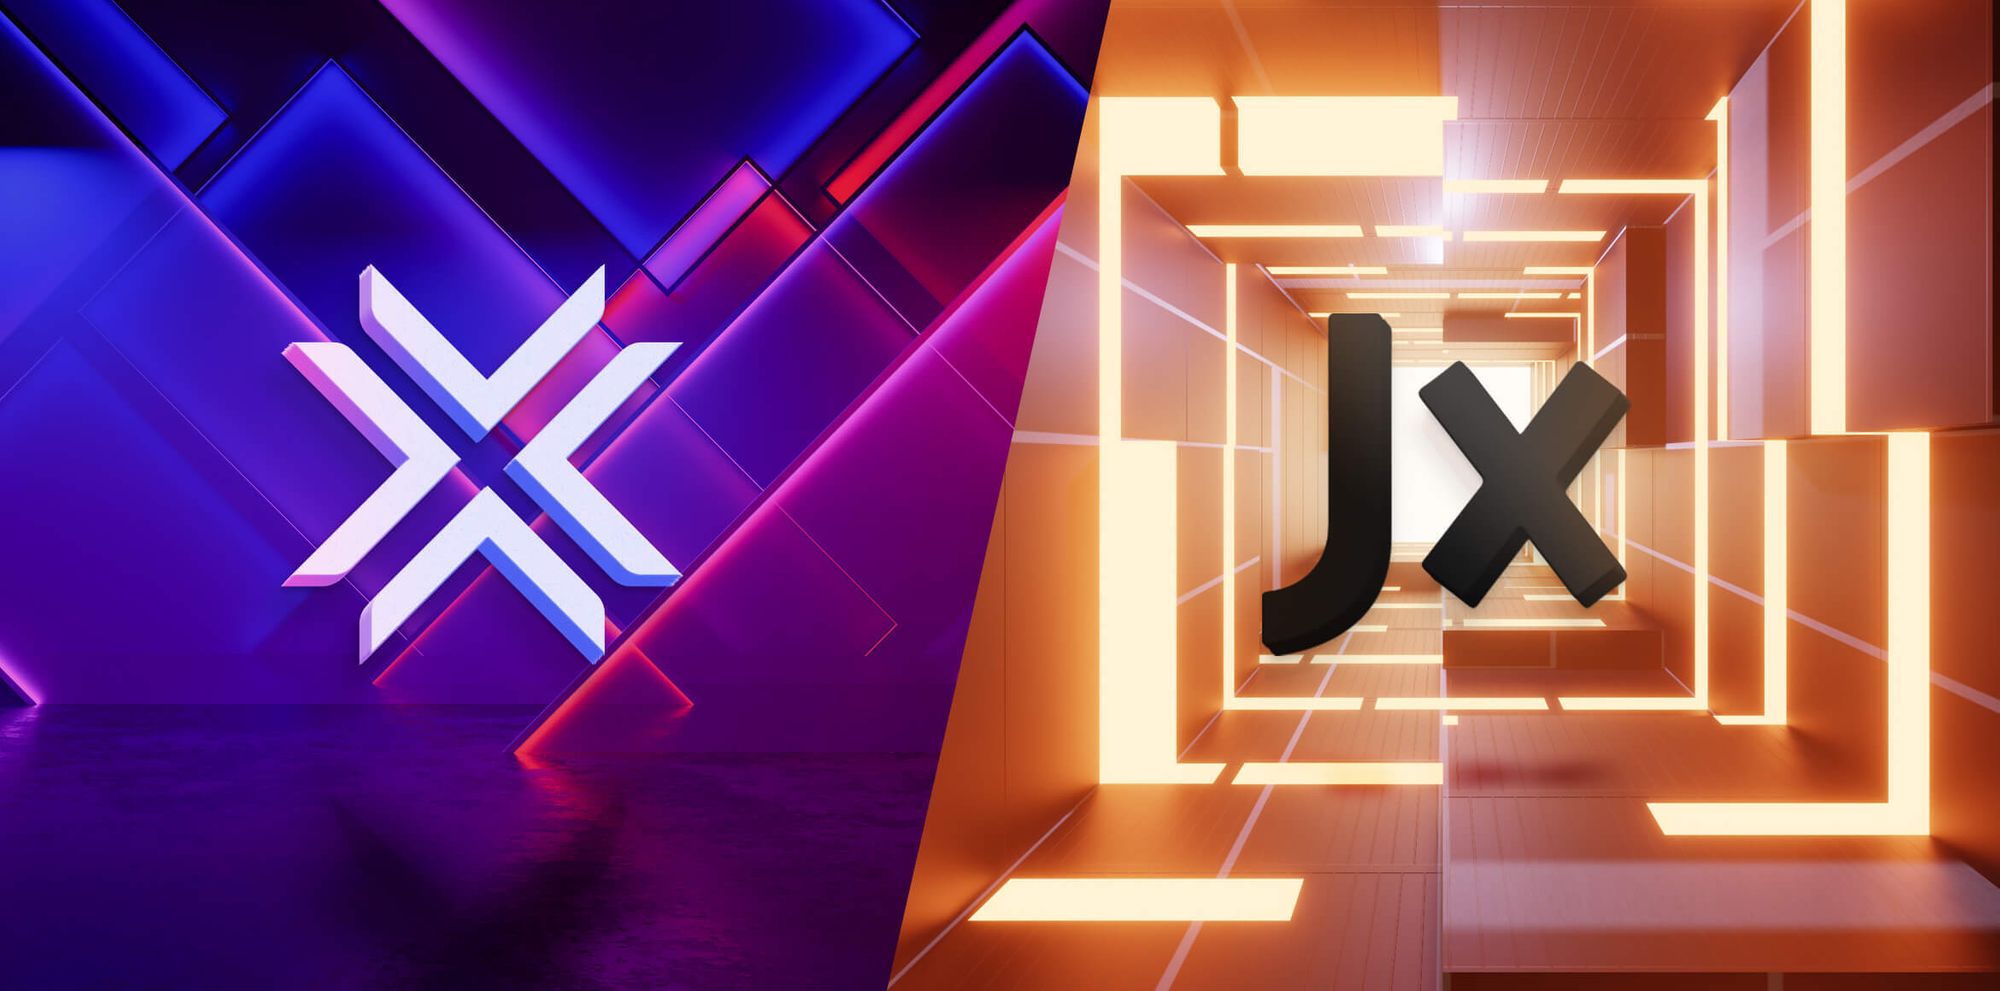 Jaxx vs. Exodus: Which is Better? An Honest Review